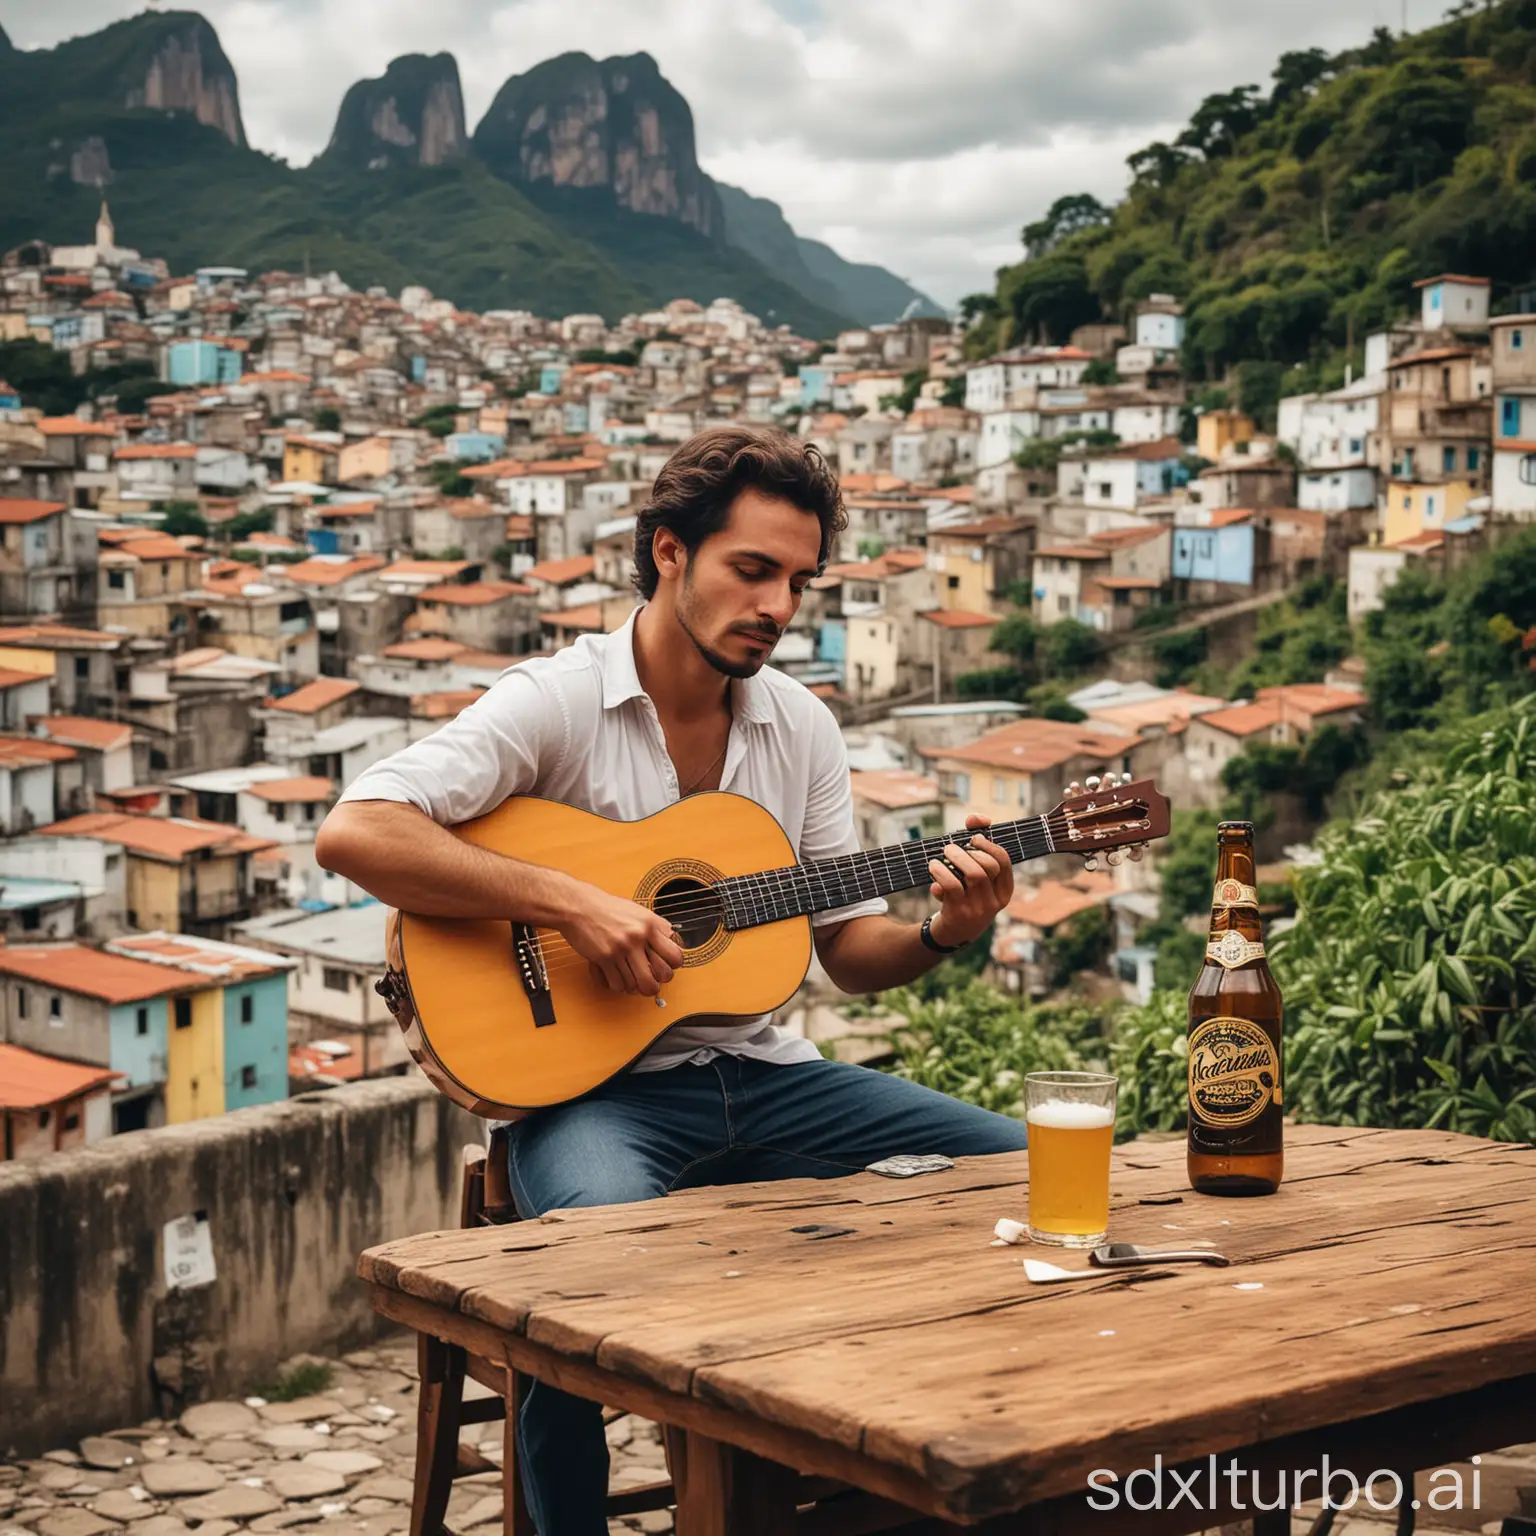 Impoverished-Musician-Playing-Samba-on-Spanish-Guitar-in-Rios-Favela